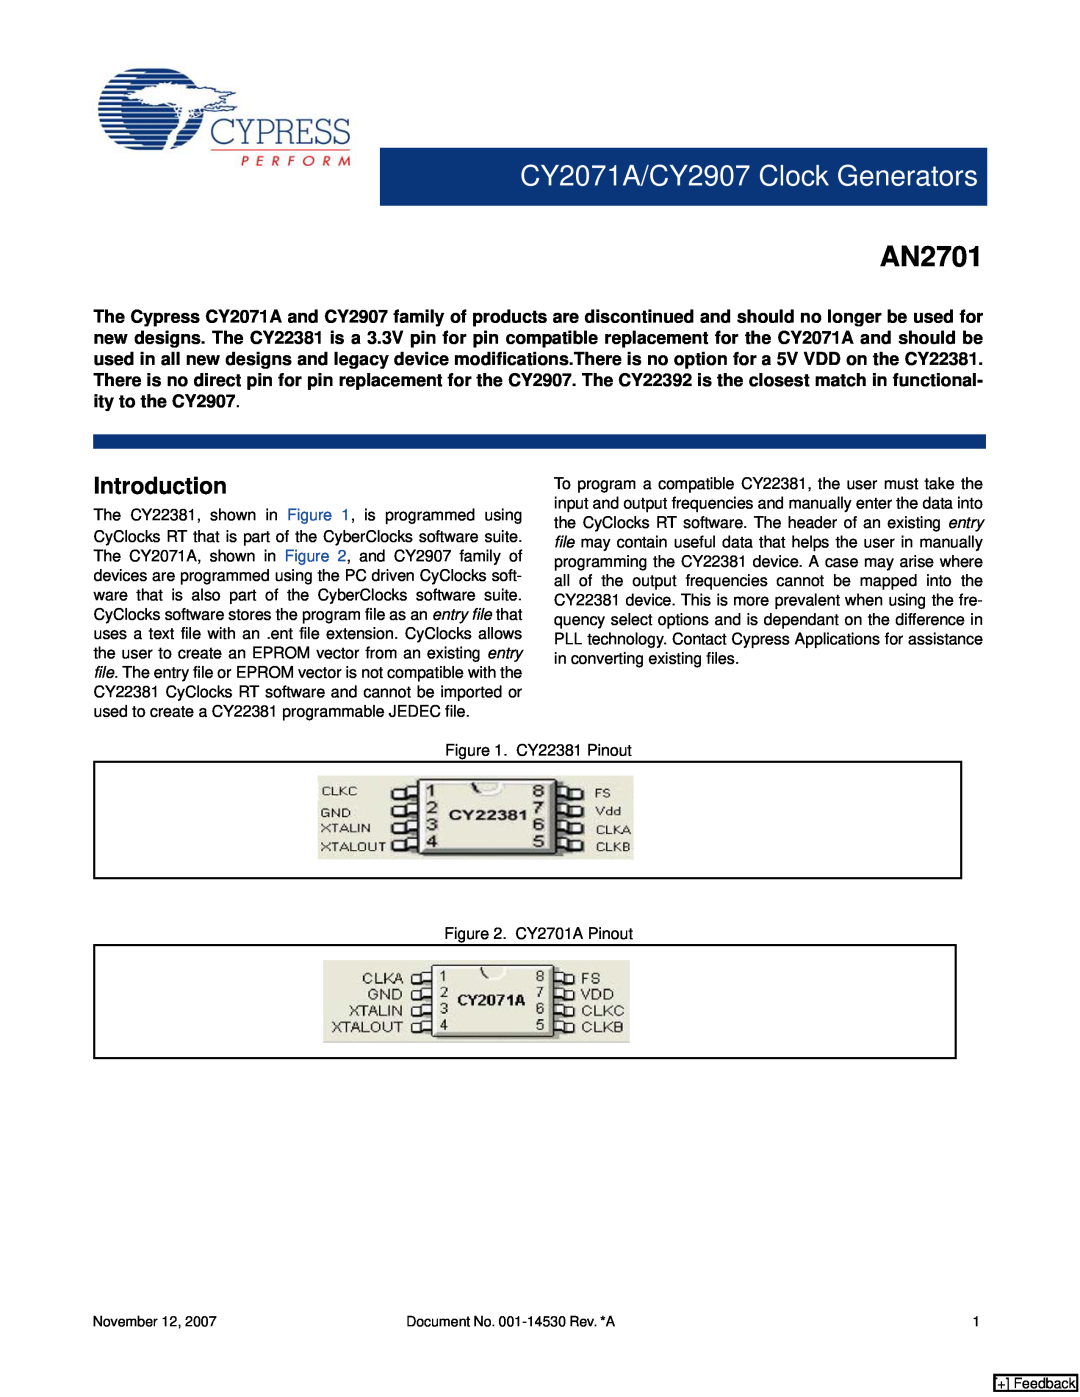 Cypress manual CY2071A/CY2907 Clock Generators, AN2701, Introduction 